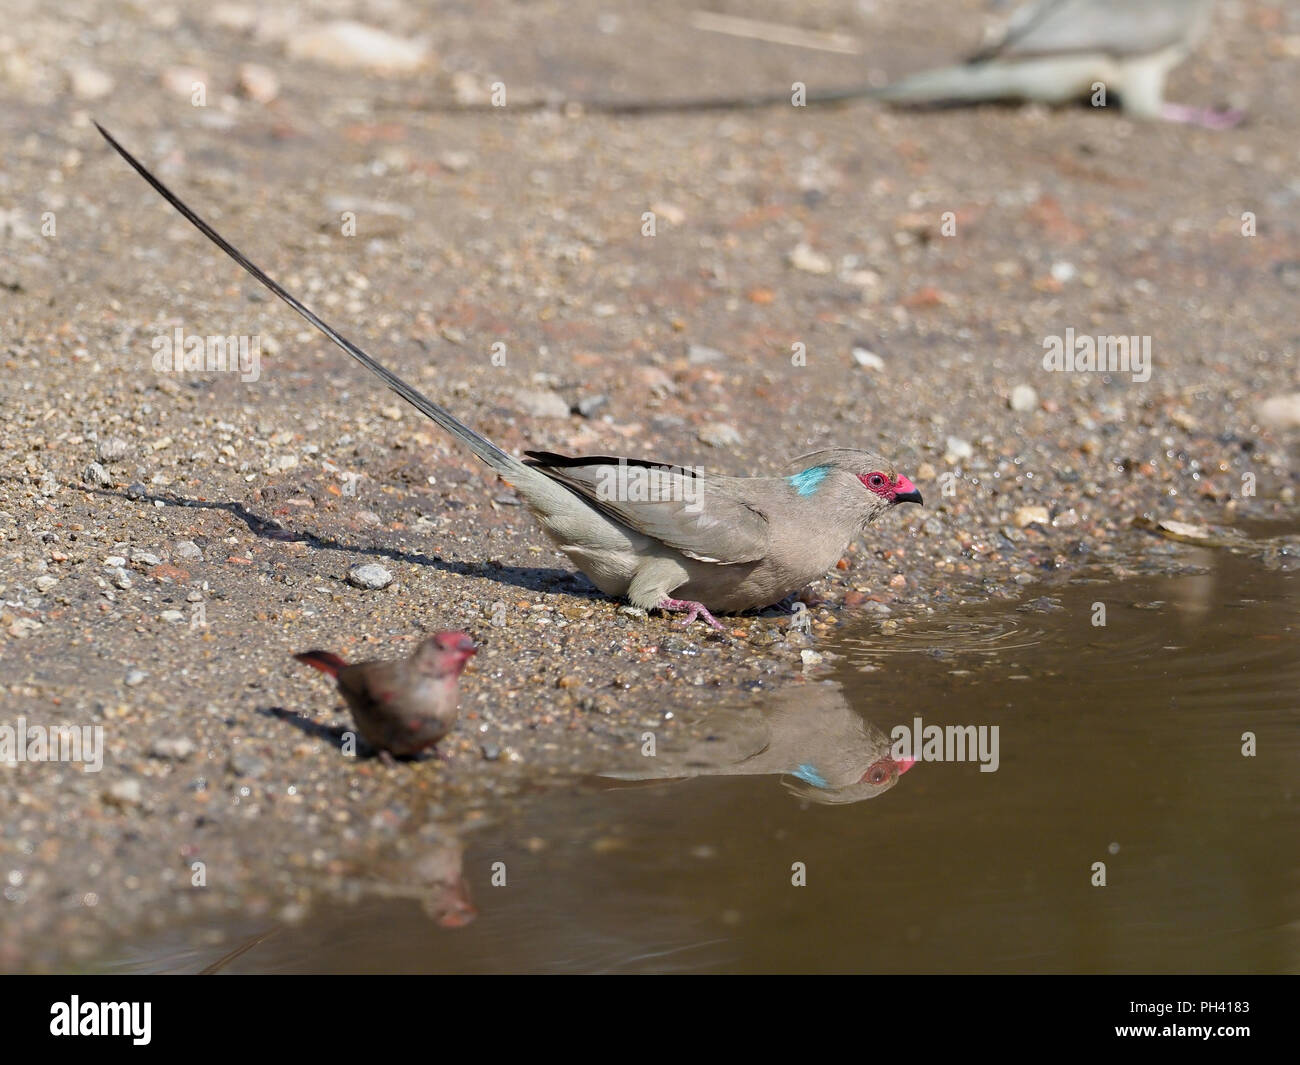 Blue-naped mousebird, Urocolius macrourus, Single bird at water, Uganda, August 2018 Stock Photo